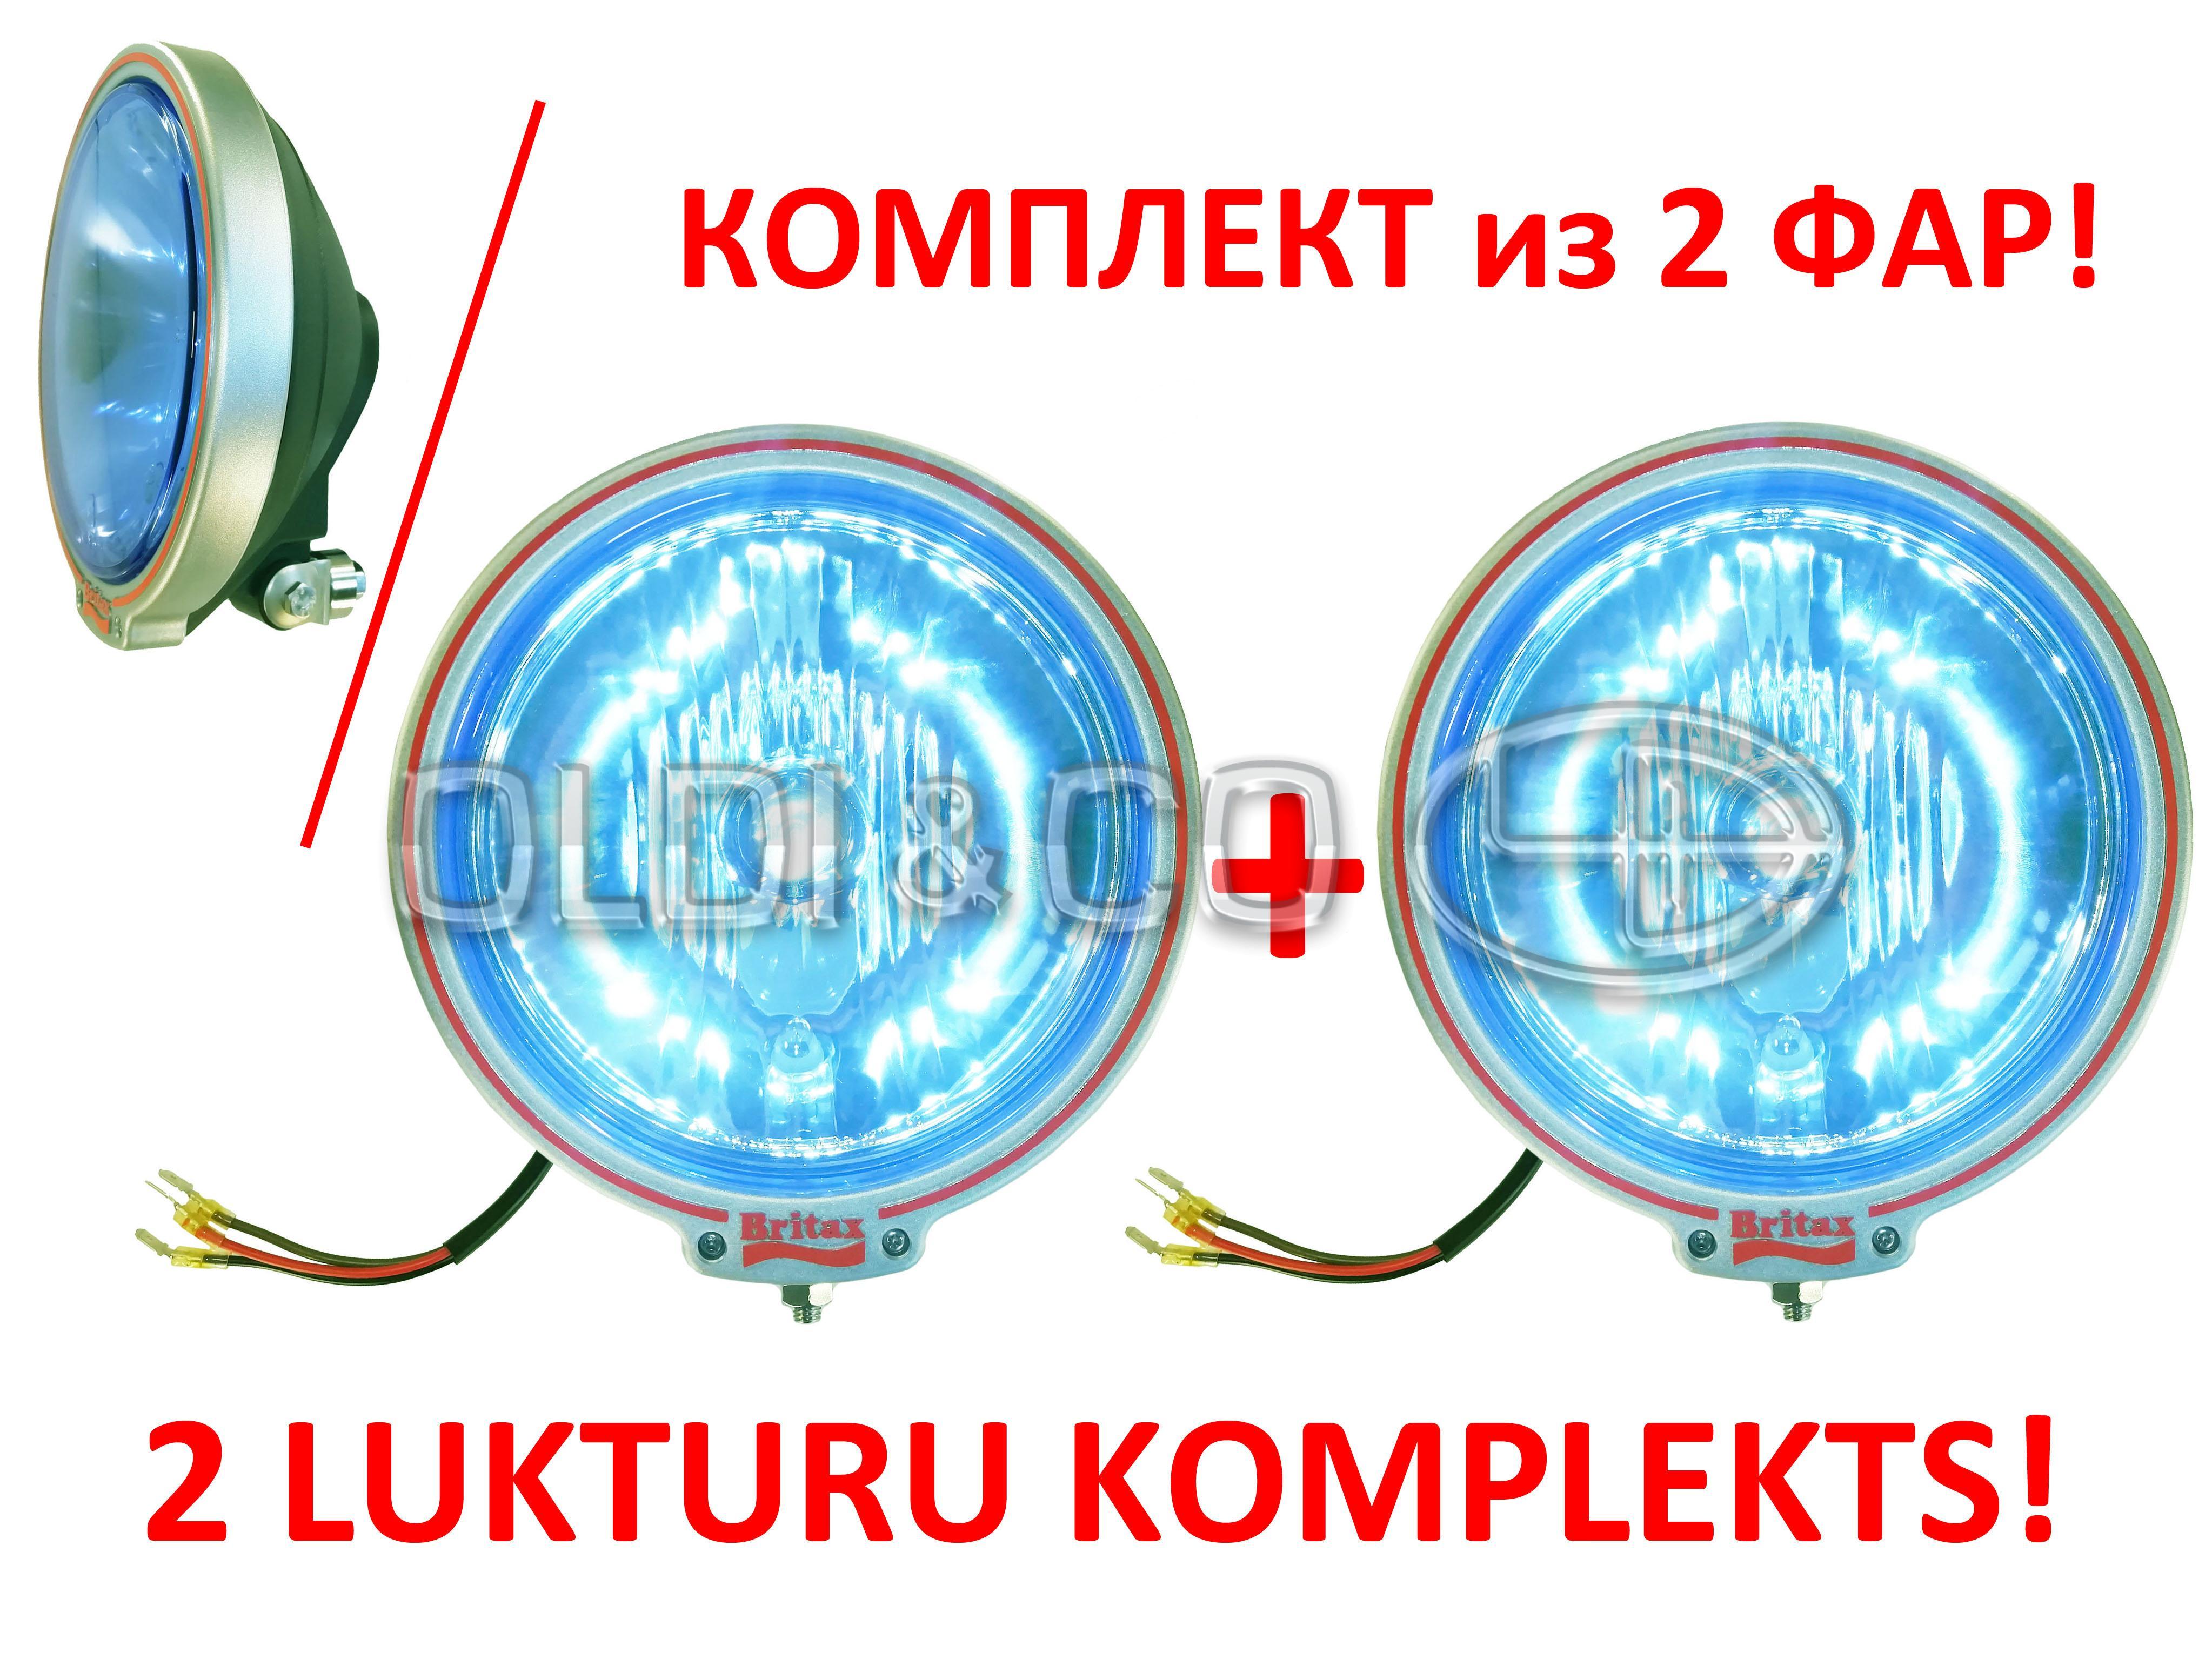 13.061.15171 Optics and bulbs → Spot light